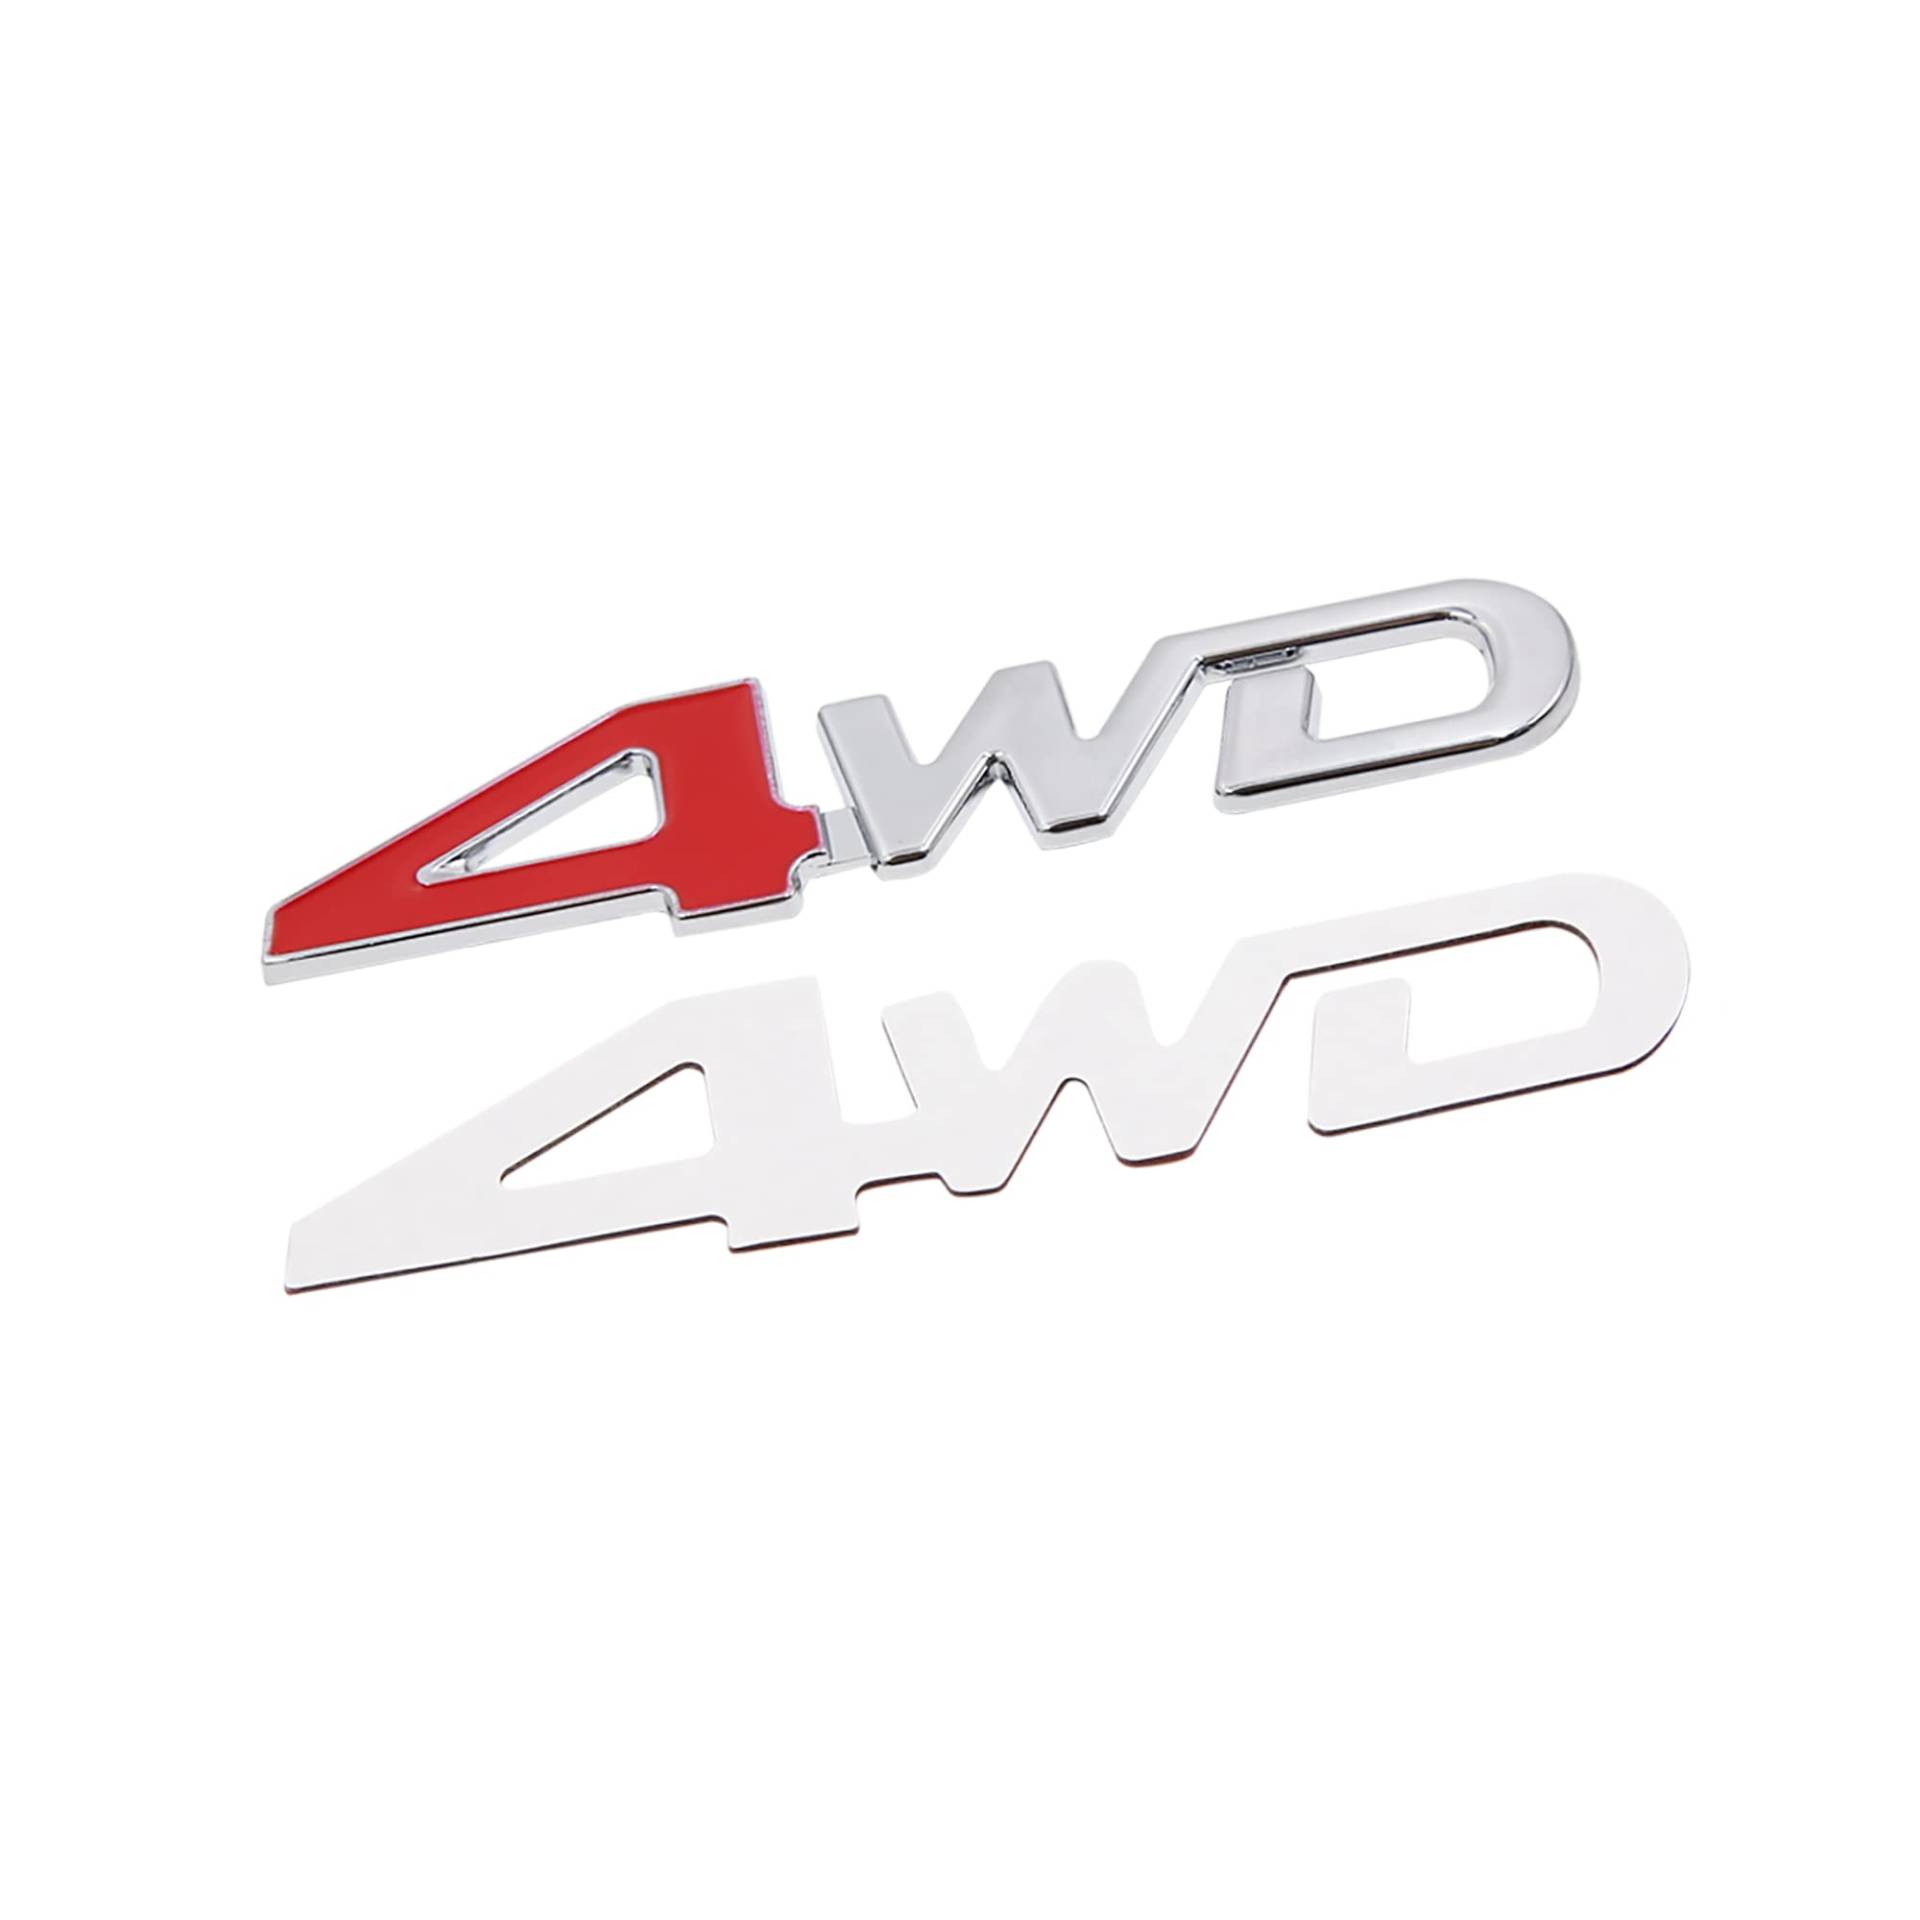 A ABSOPRO Metall 4WD Muster Autokarosserie Emblem Badge Aufkleber Silber Ton Rot von A ABSOPRO